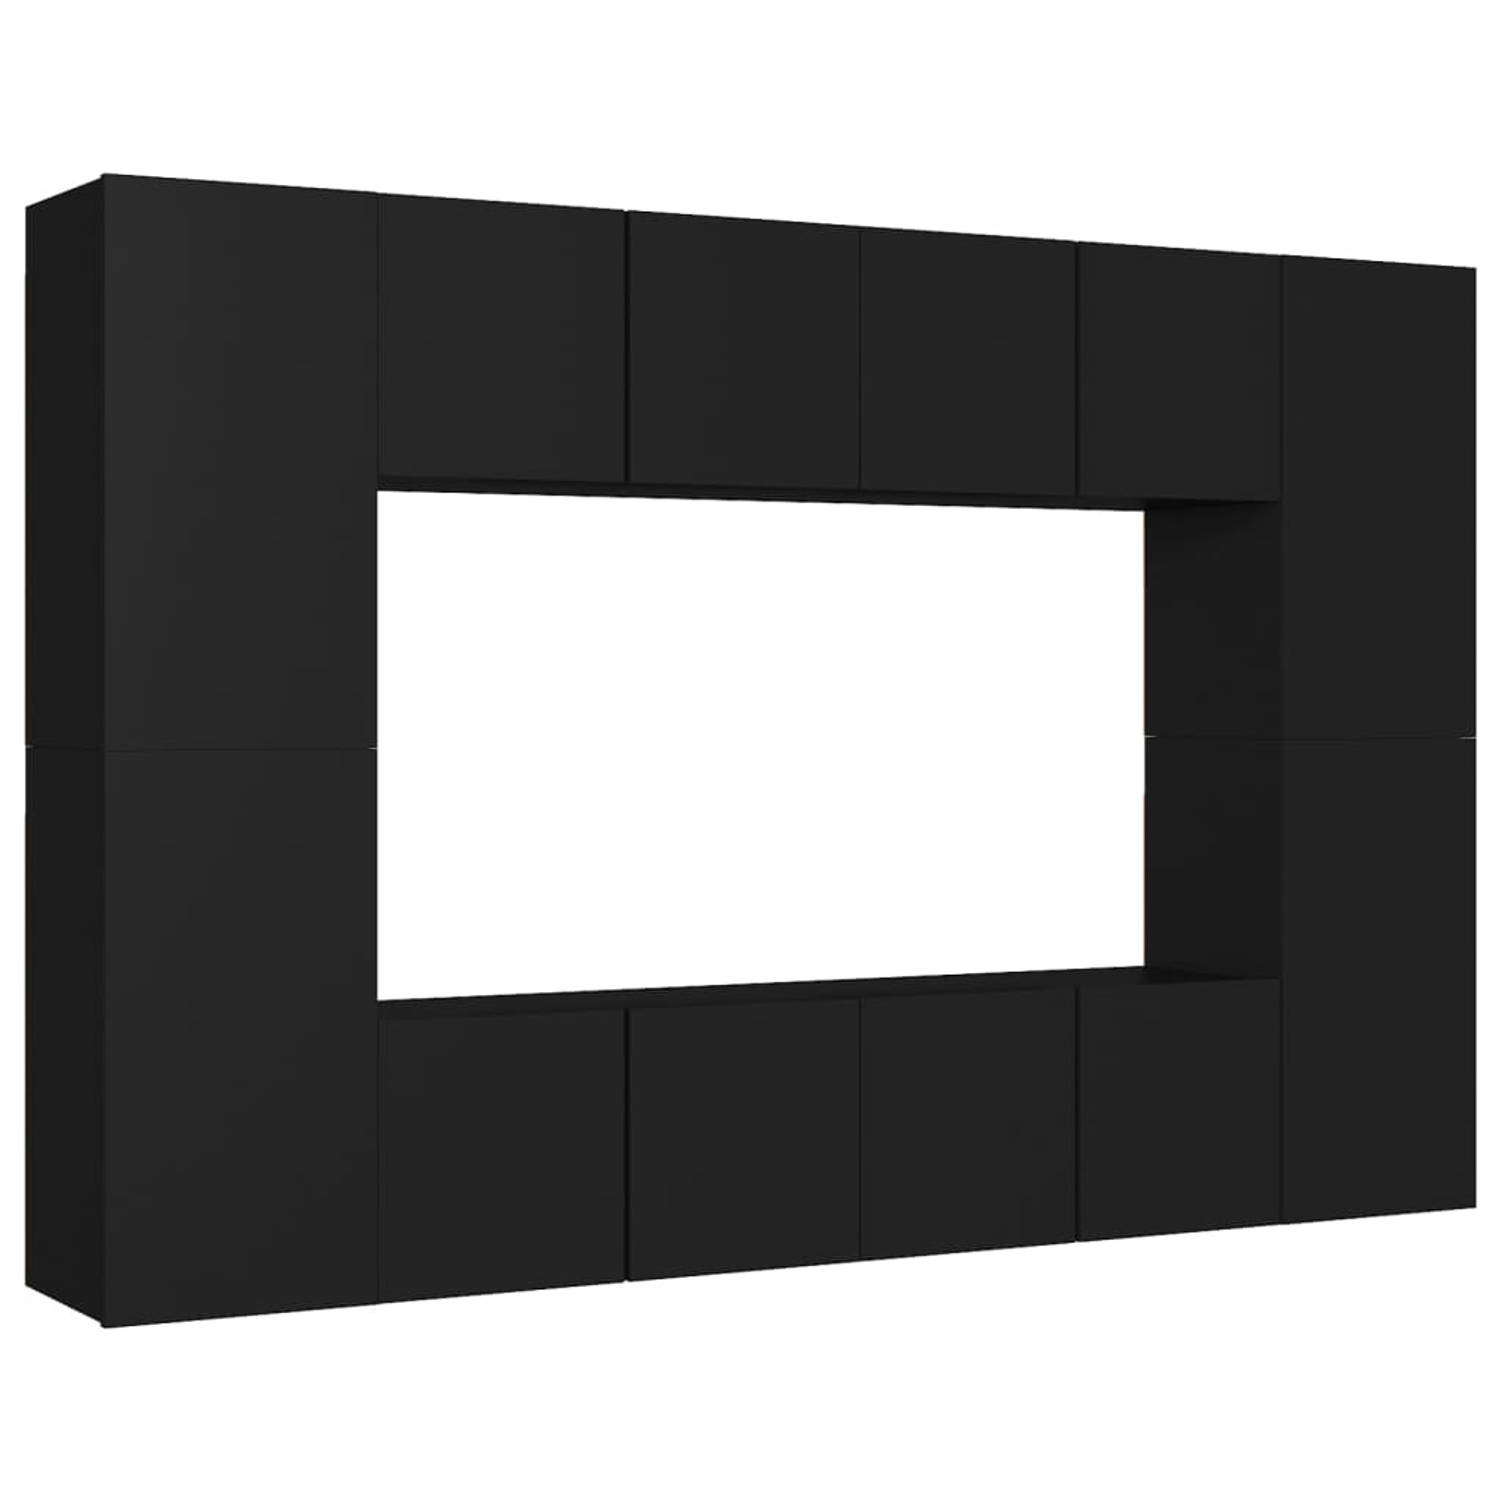 The Living Store TV-meubel Stereokast - zwart spaanplaat - 60x30x30 cm (L) / 30.5x30x60 cm (M) - Montage vereist - 4x tv-meubel (L) + 4x tv-meubel (M)